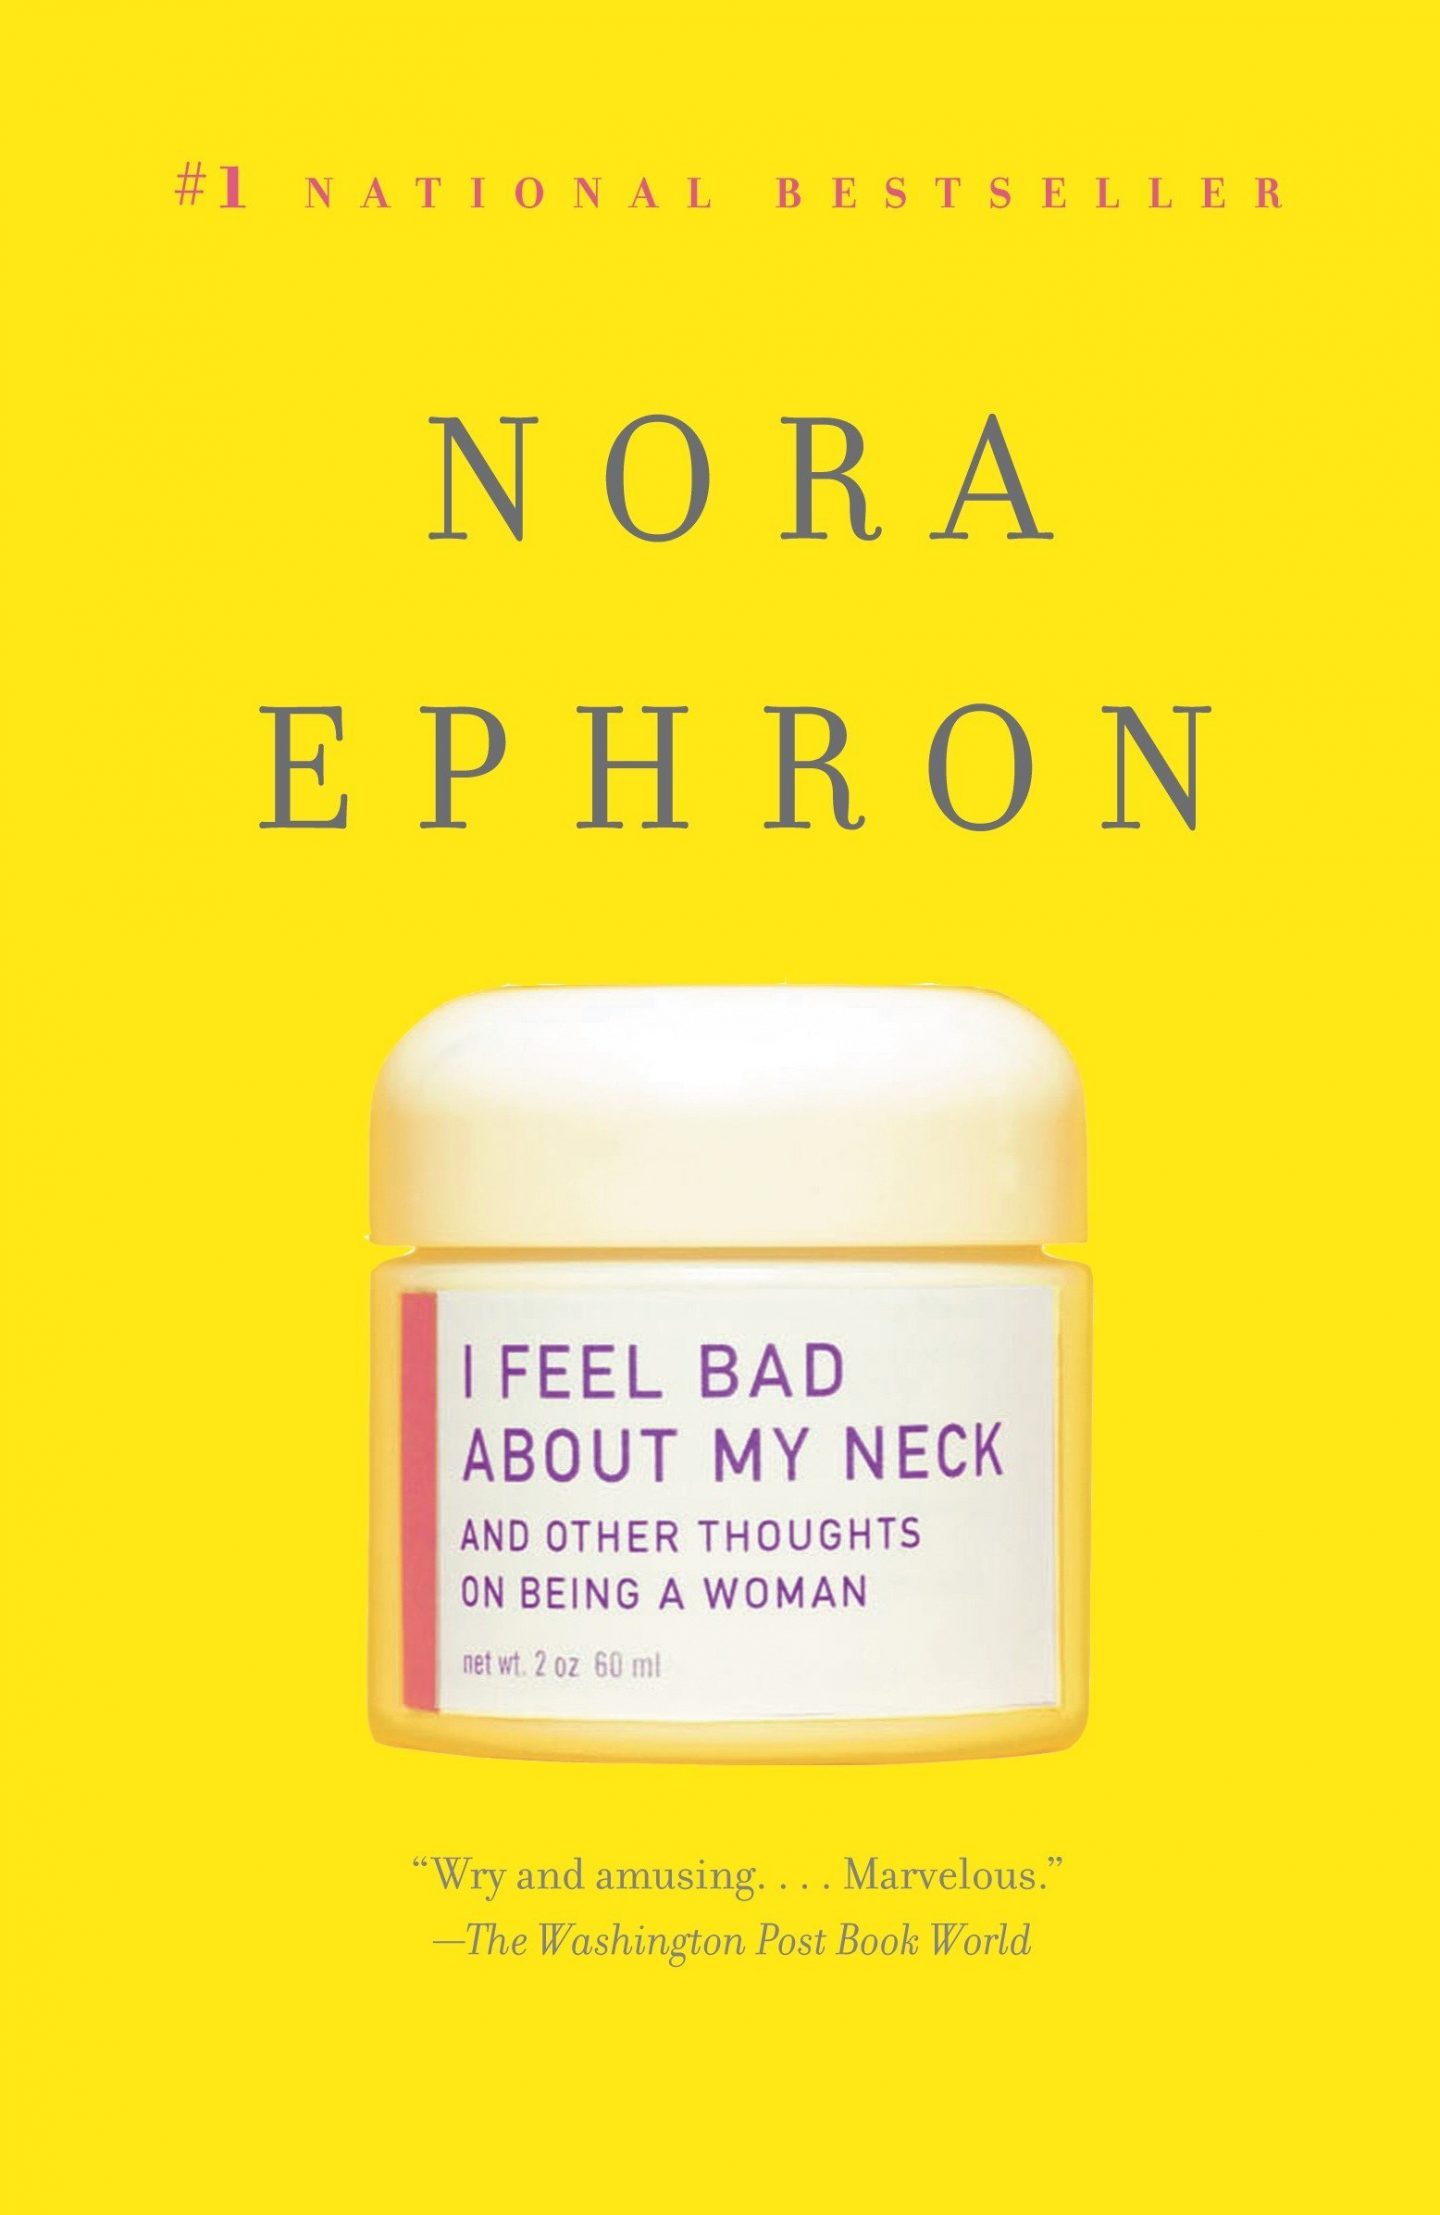 I feel bad about my neck Nora Ephron